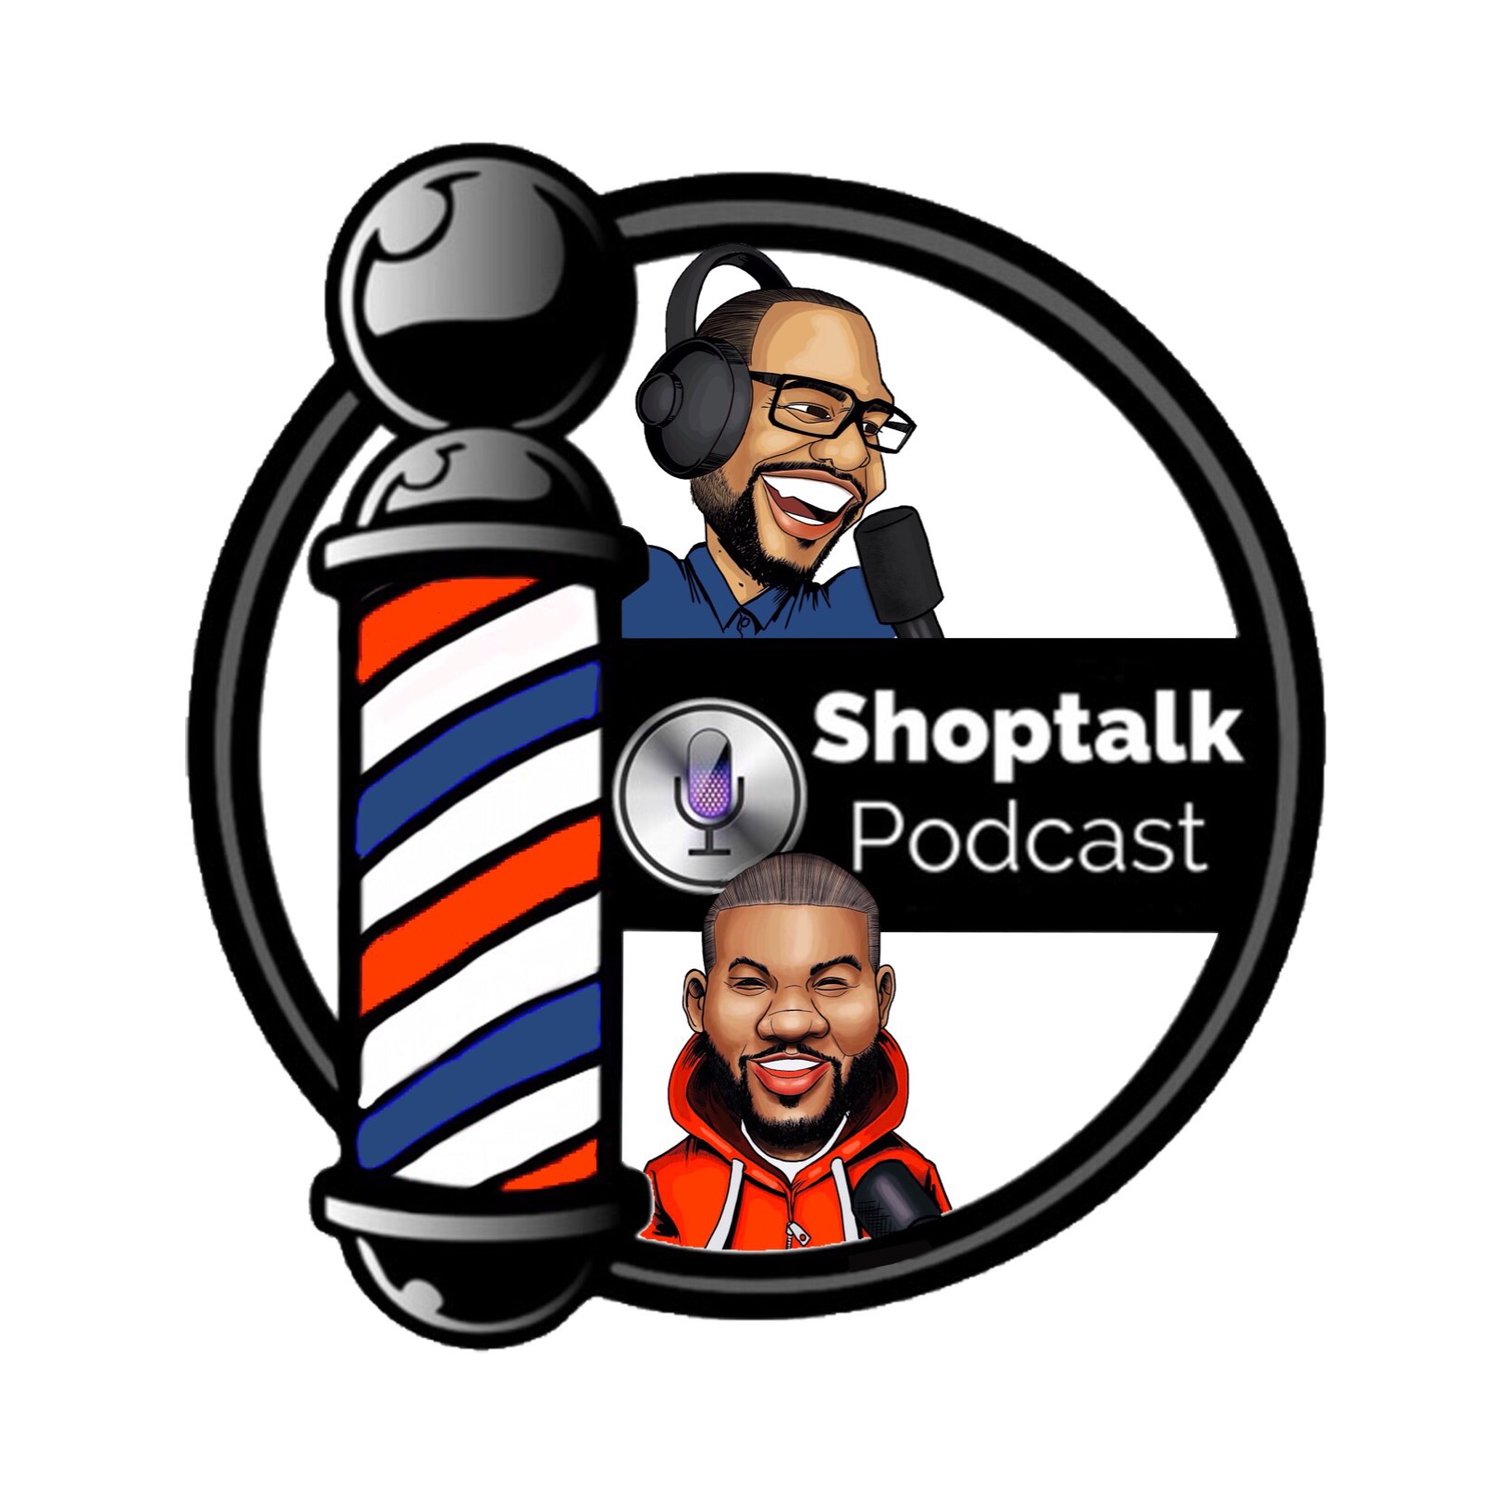 #ShopTalkPodcast